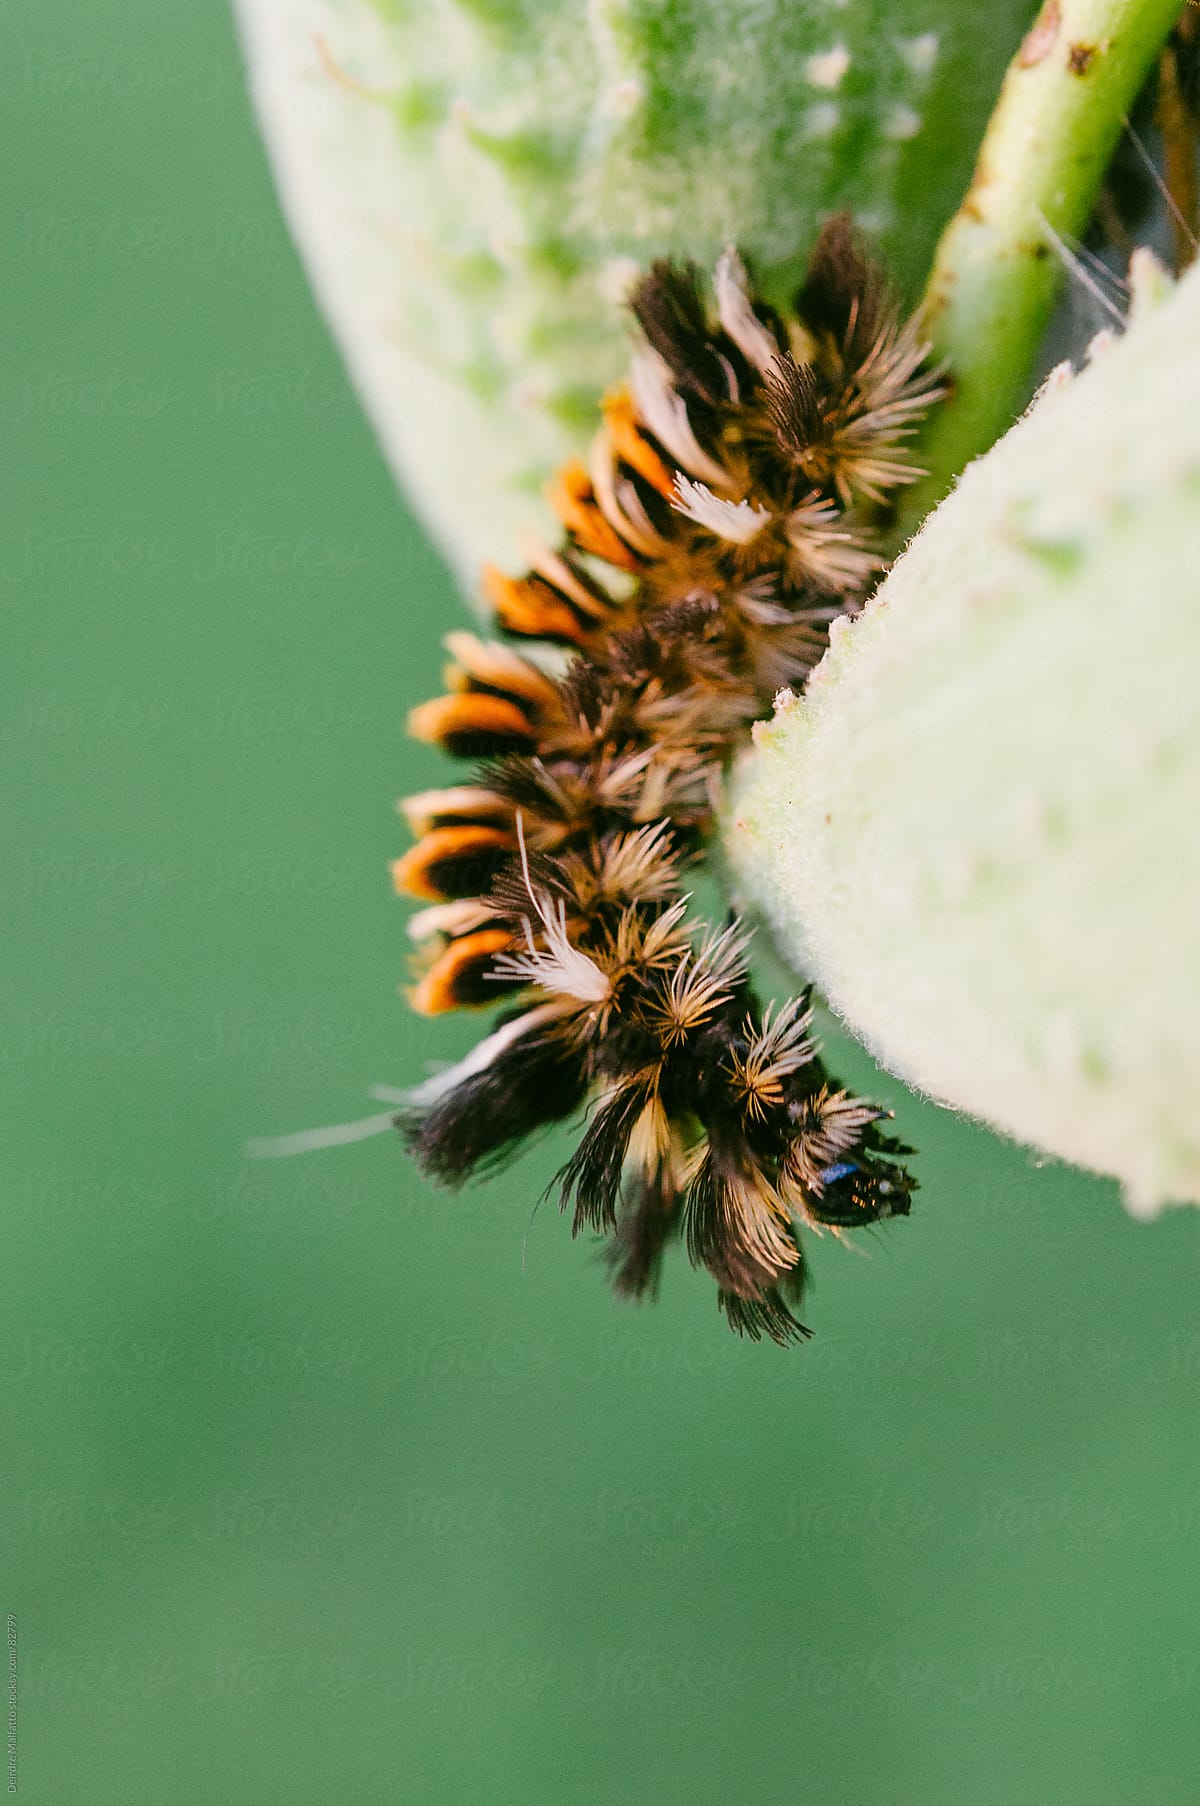 milkweed tussock caterpillars crawling on a milkweed plant